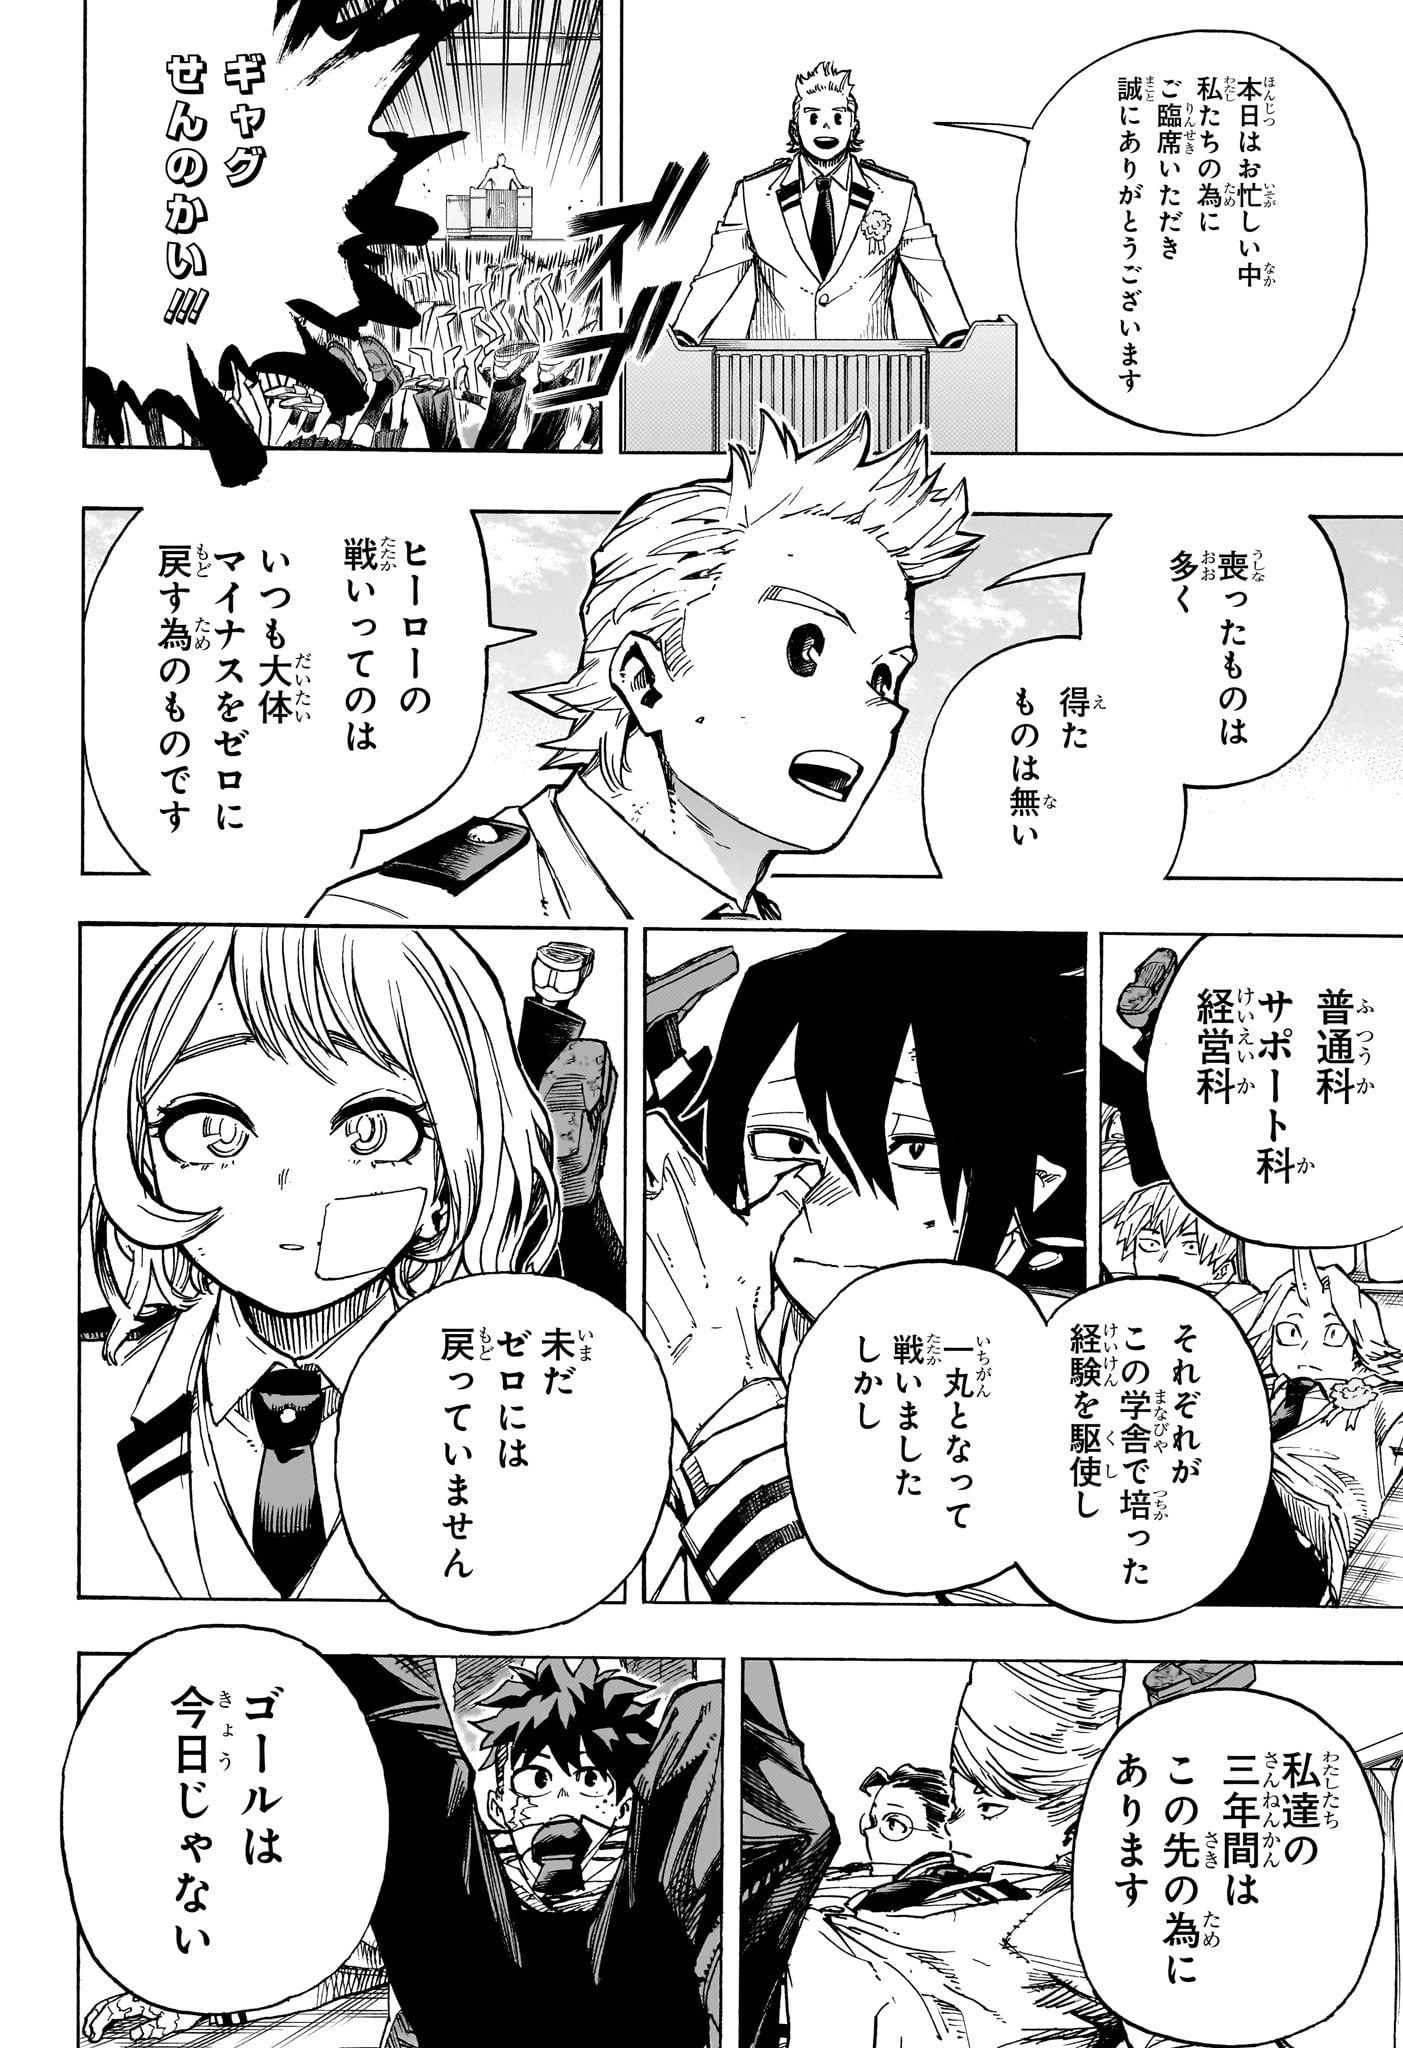 Boku no Hero Academia - Chapter 425 - Page 4